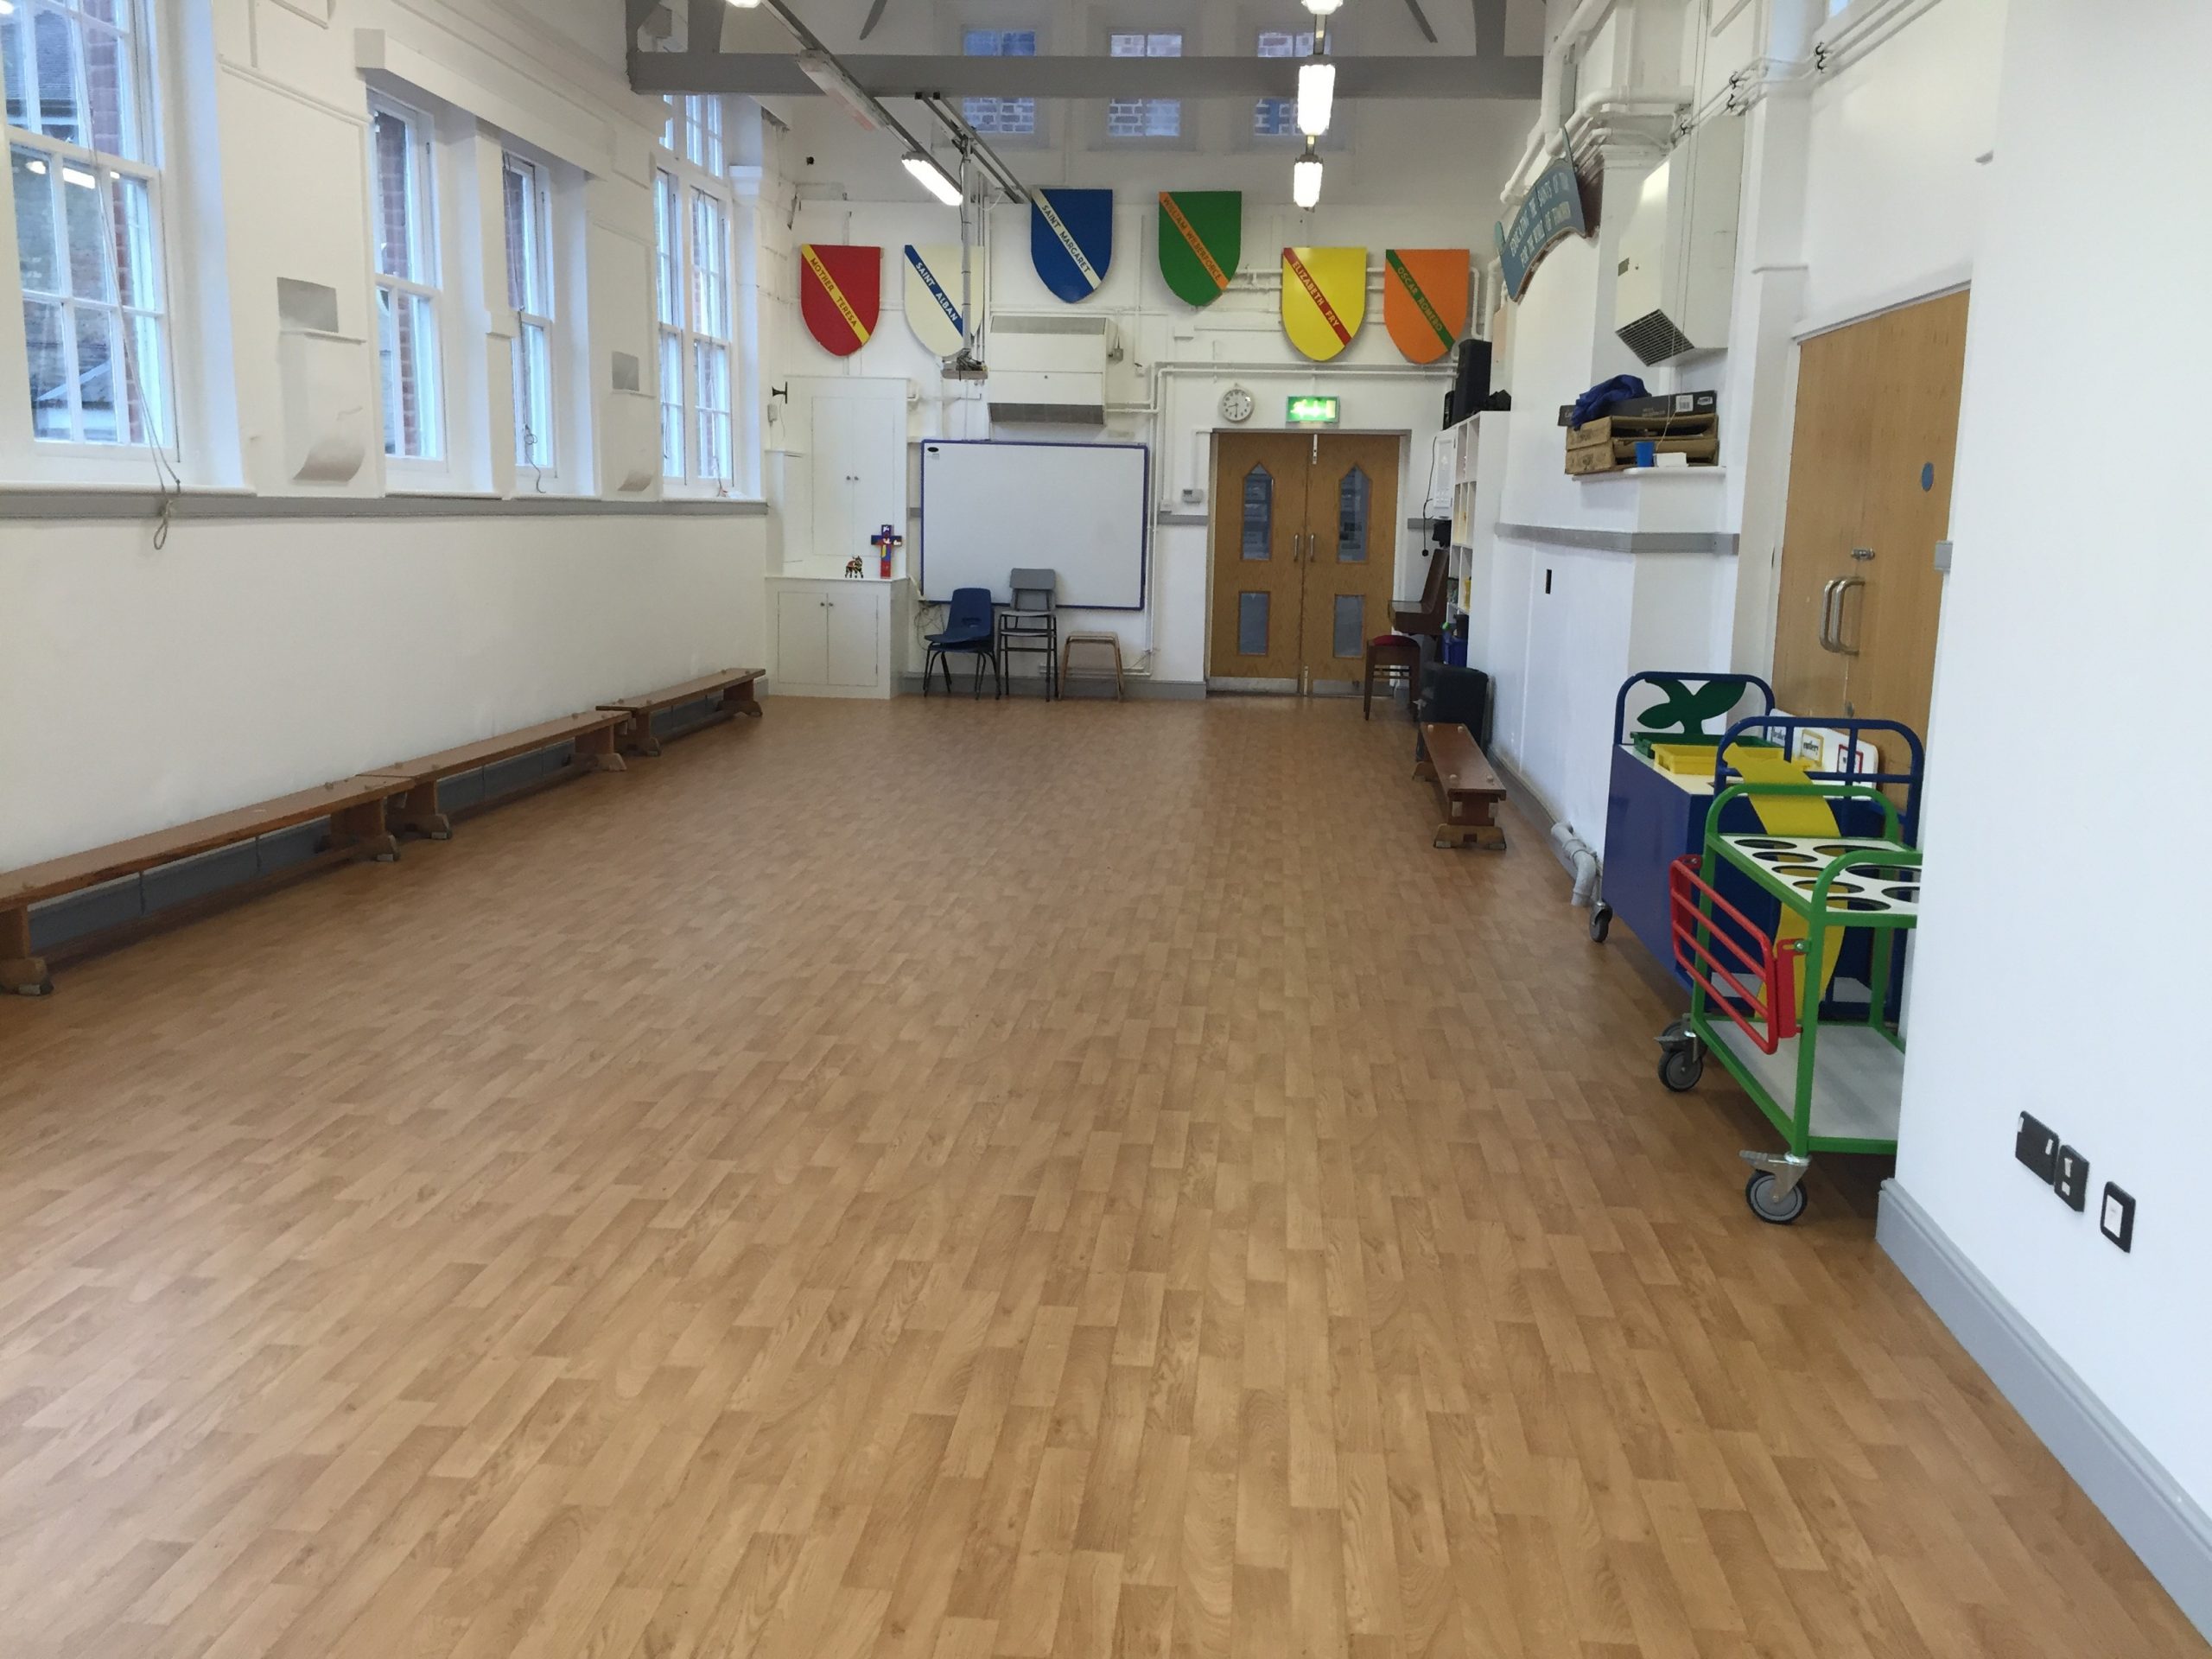 All Saint's School, Blackheath South East London Canteen & Hall Flooring